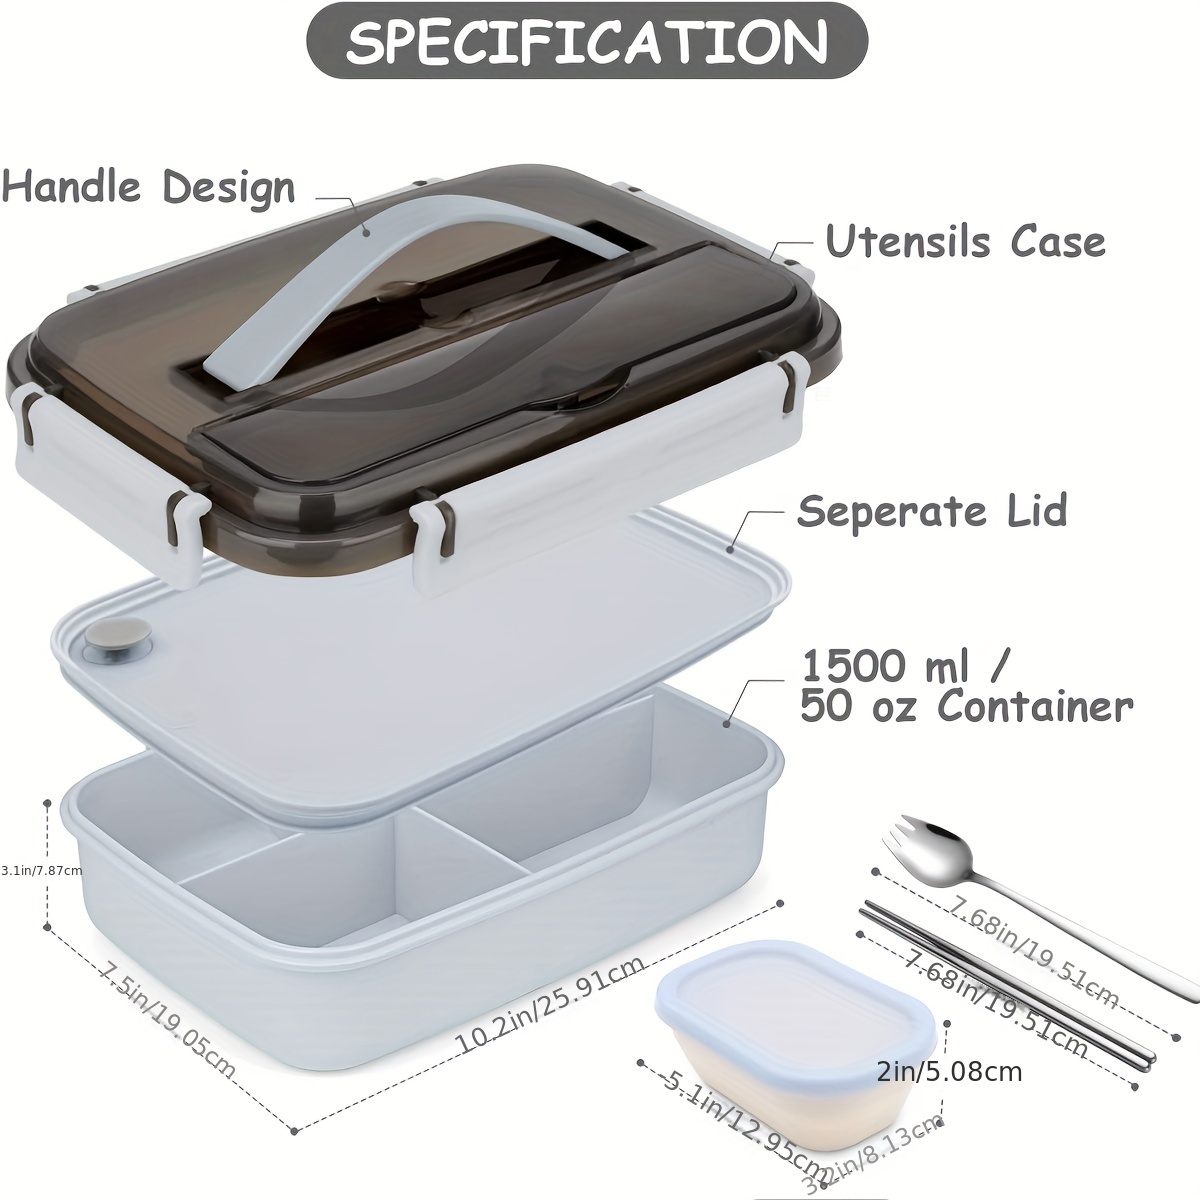 1pc Plastic Lunch Box, Minimalist Clear Multifunction Food Storage